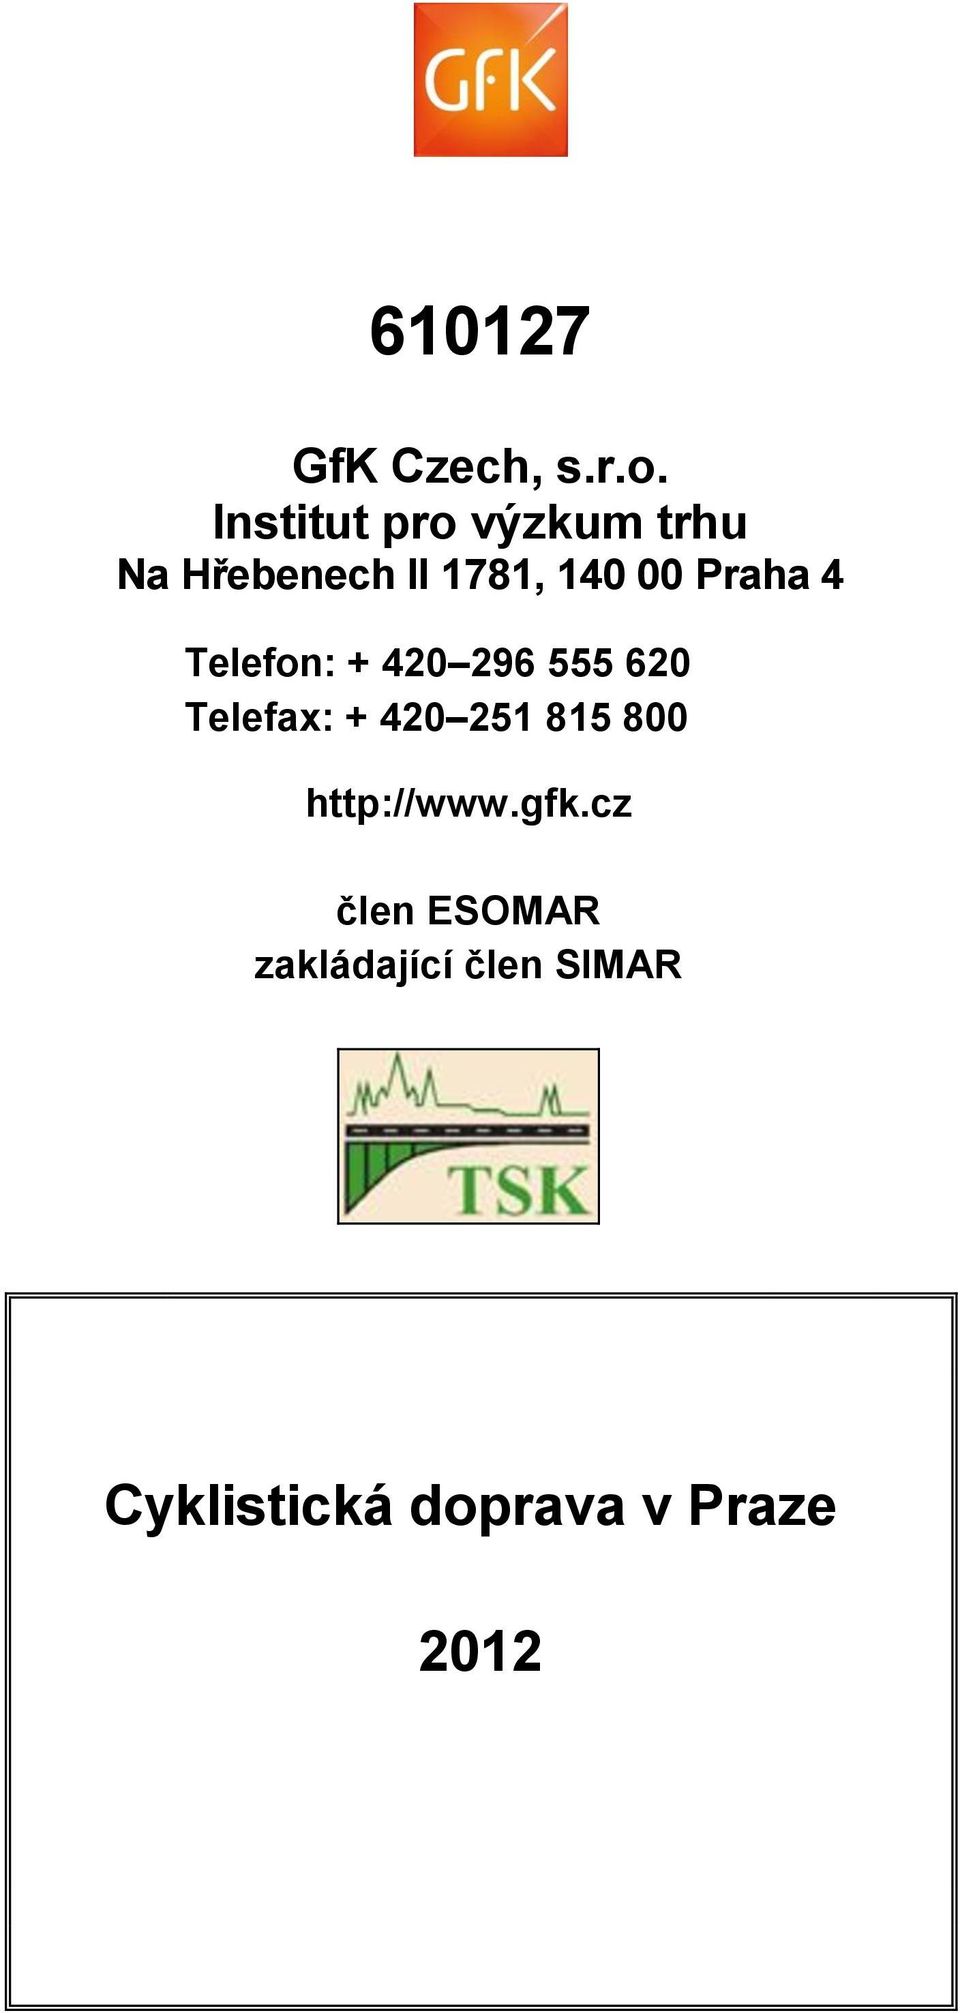 00 Praha Telefon: + 0 96 555 60 Telefax: + 0 5